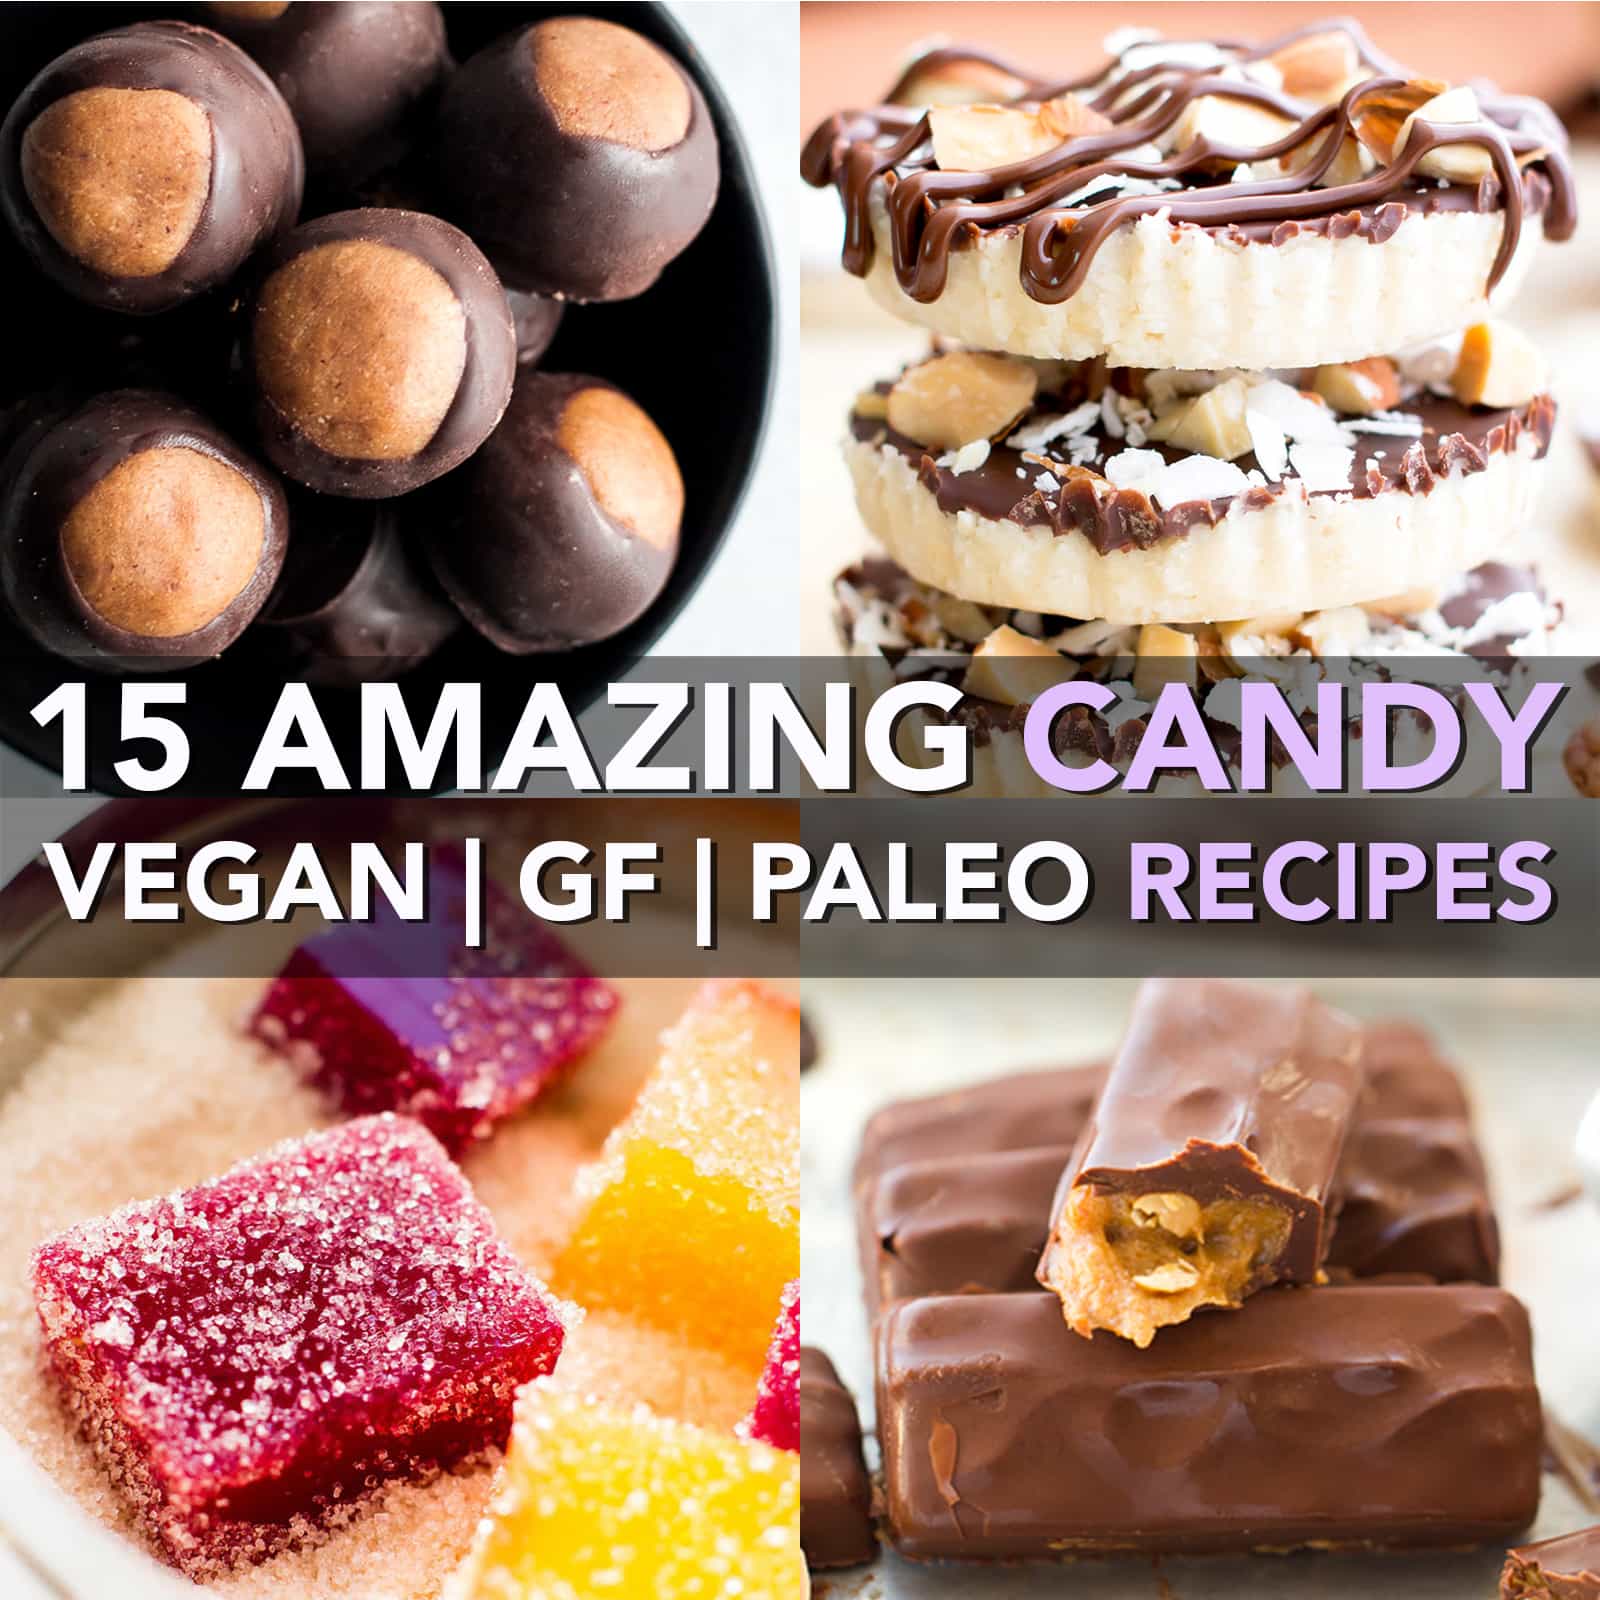 15 Amazing Paleo Gluten Free Vegan Candy Recipes